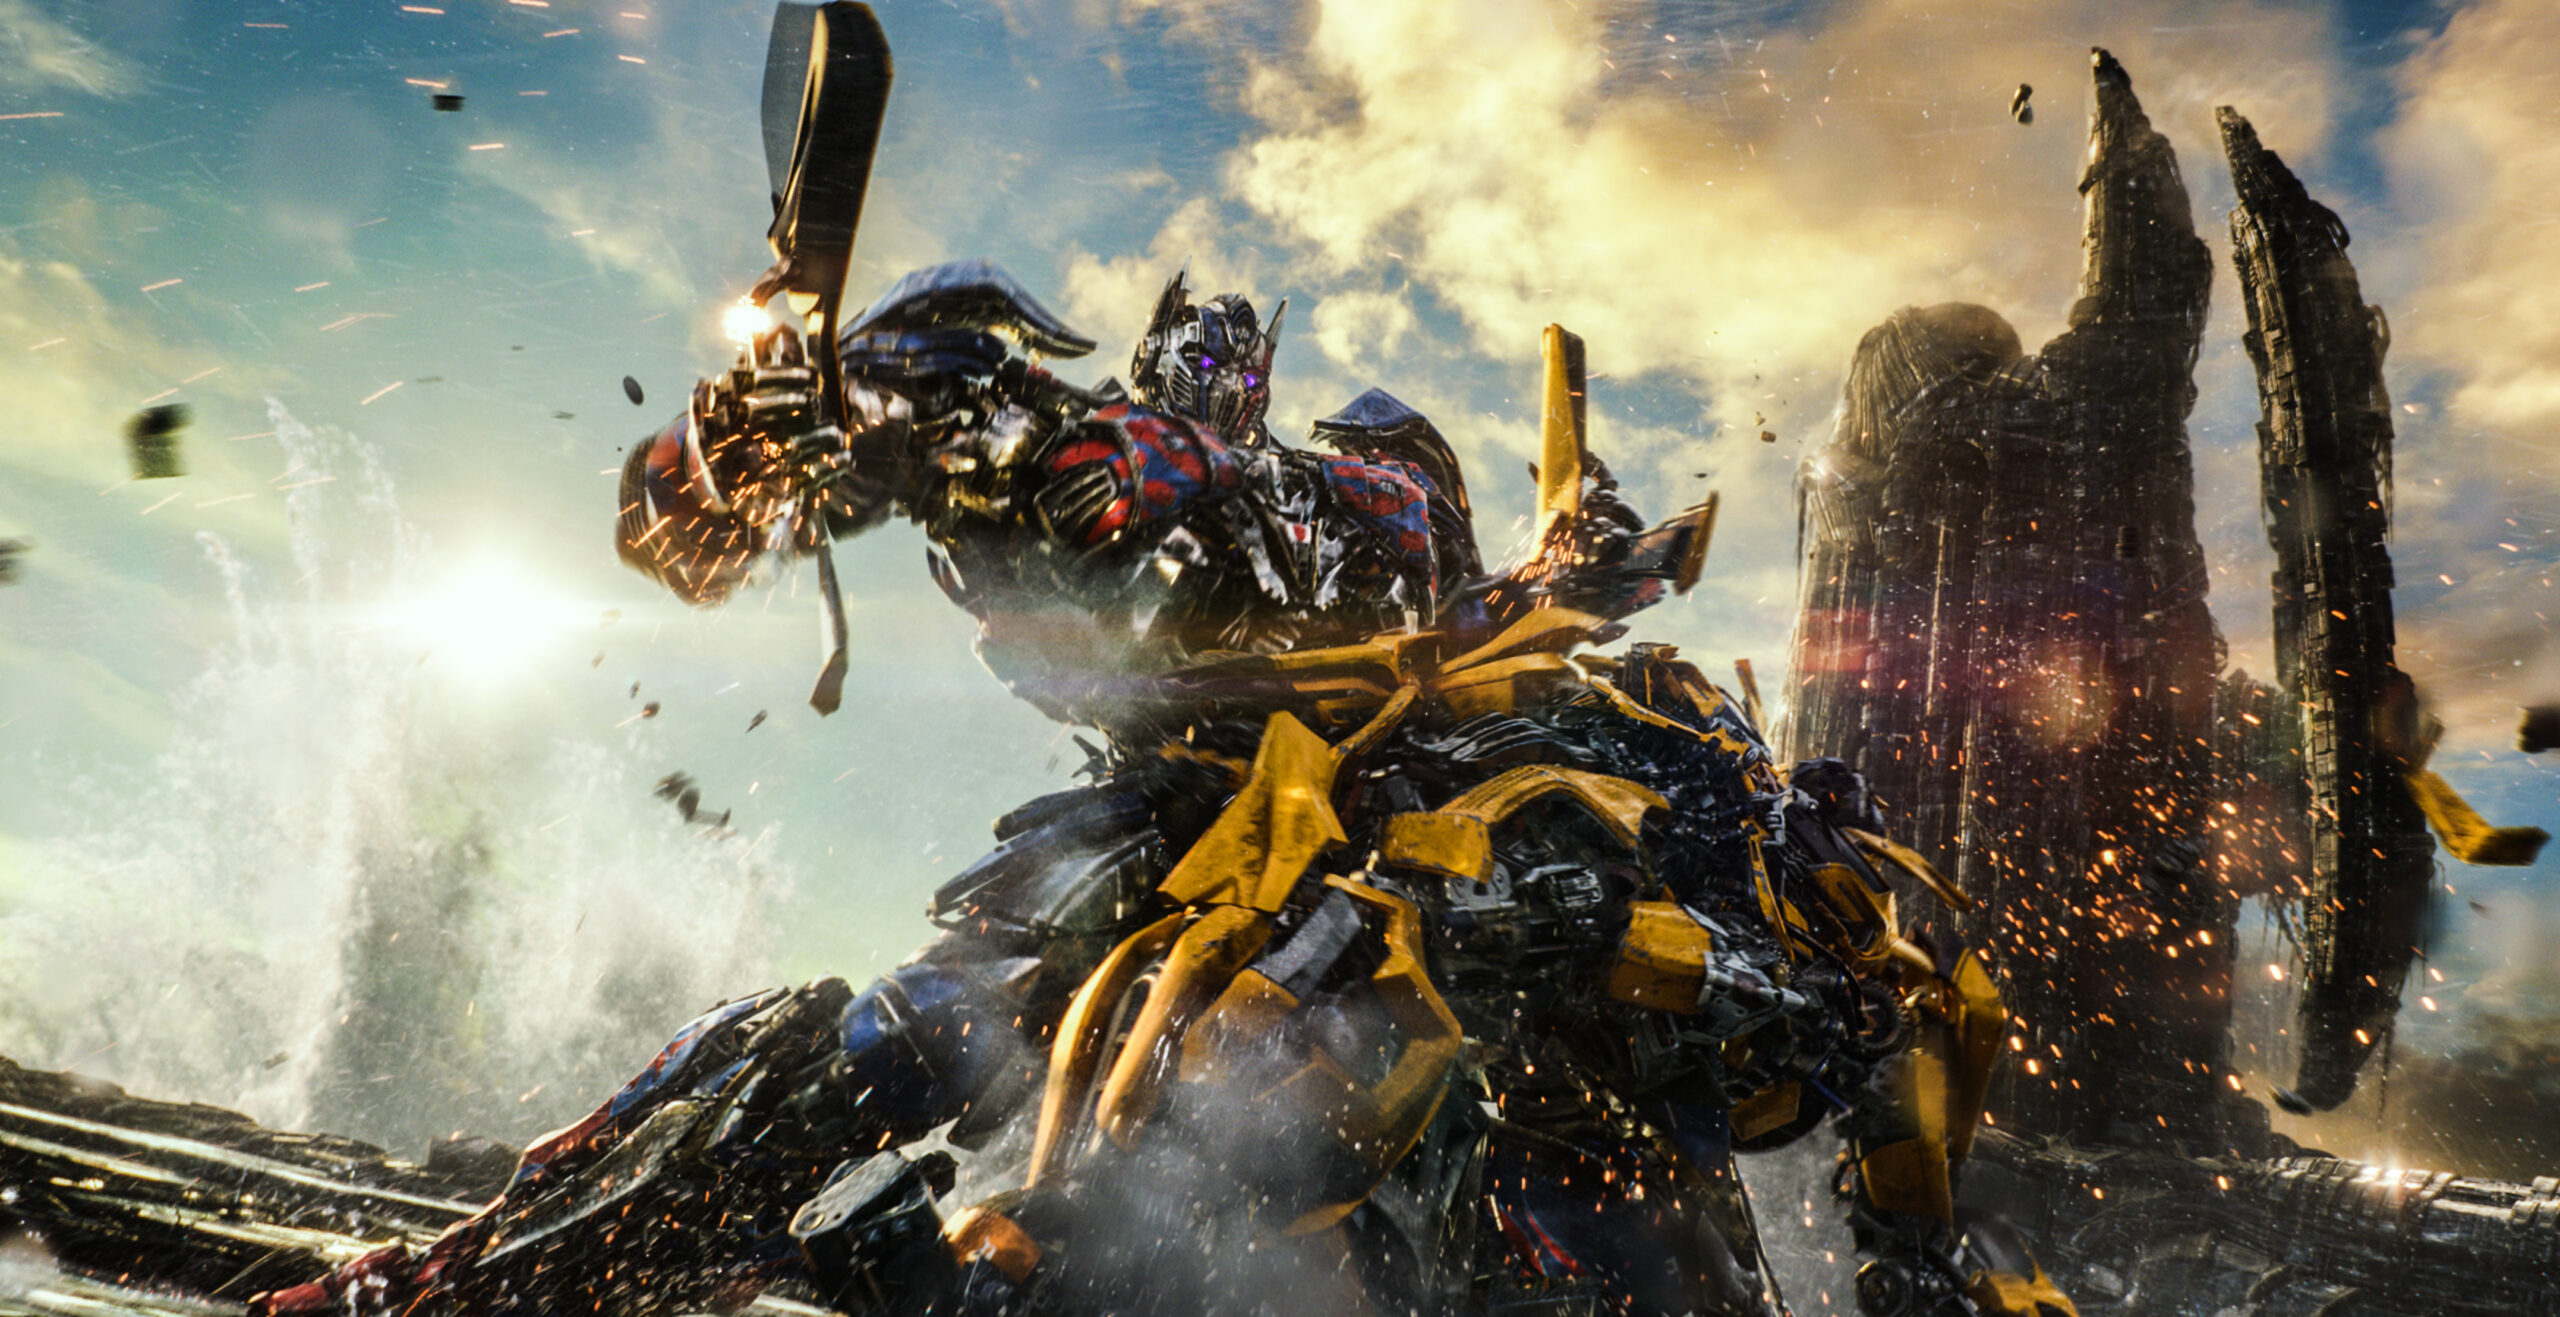 Transformers Ostatni Rycerz Transformers The Last Knight 02 POLSAT FILM scaled